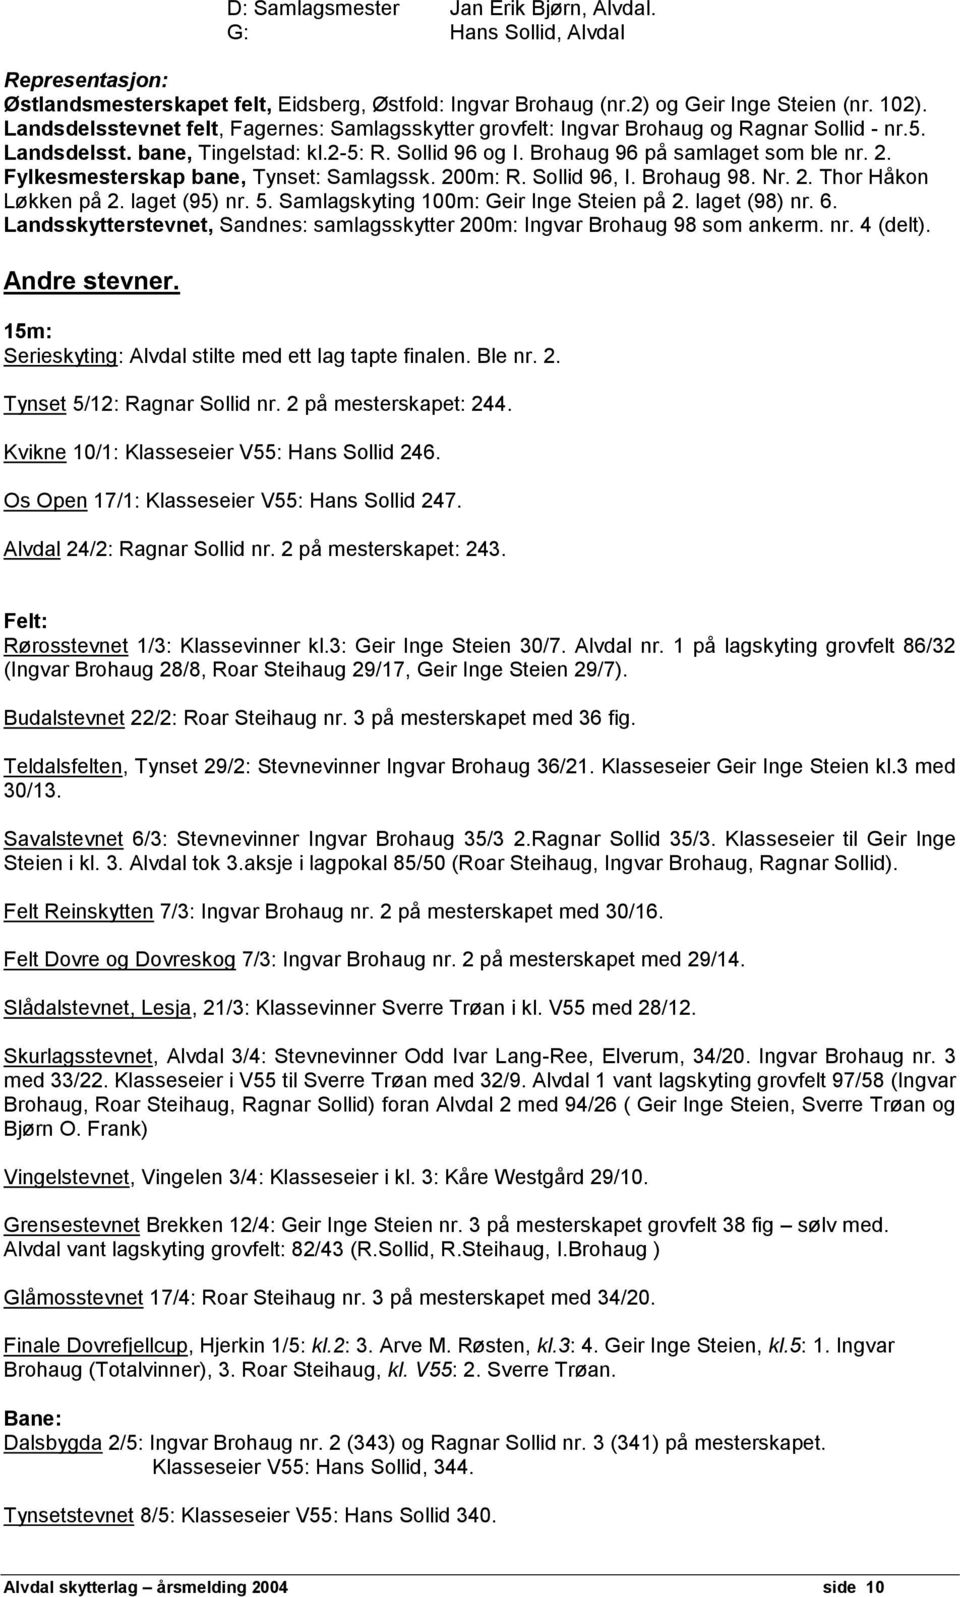 Fylkesmesterskap bane, Tynset: Samlagssk. 200m: R. Sollid 96, I. Brohaug 98. Nr. 2. Thor Håkon Løkken på 2. laget (95) nr. 5. Samlagskyting 100m: Geir Inge Steien på 2. laget (98) nr. 6.